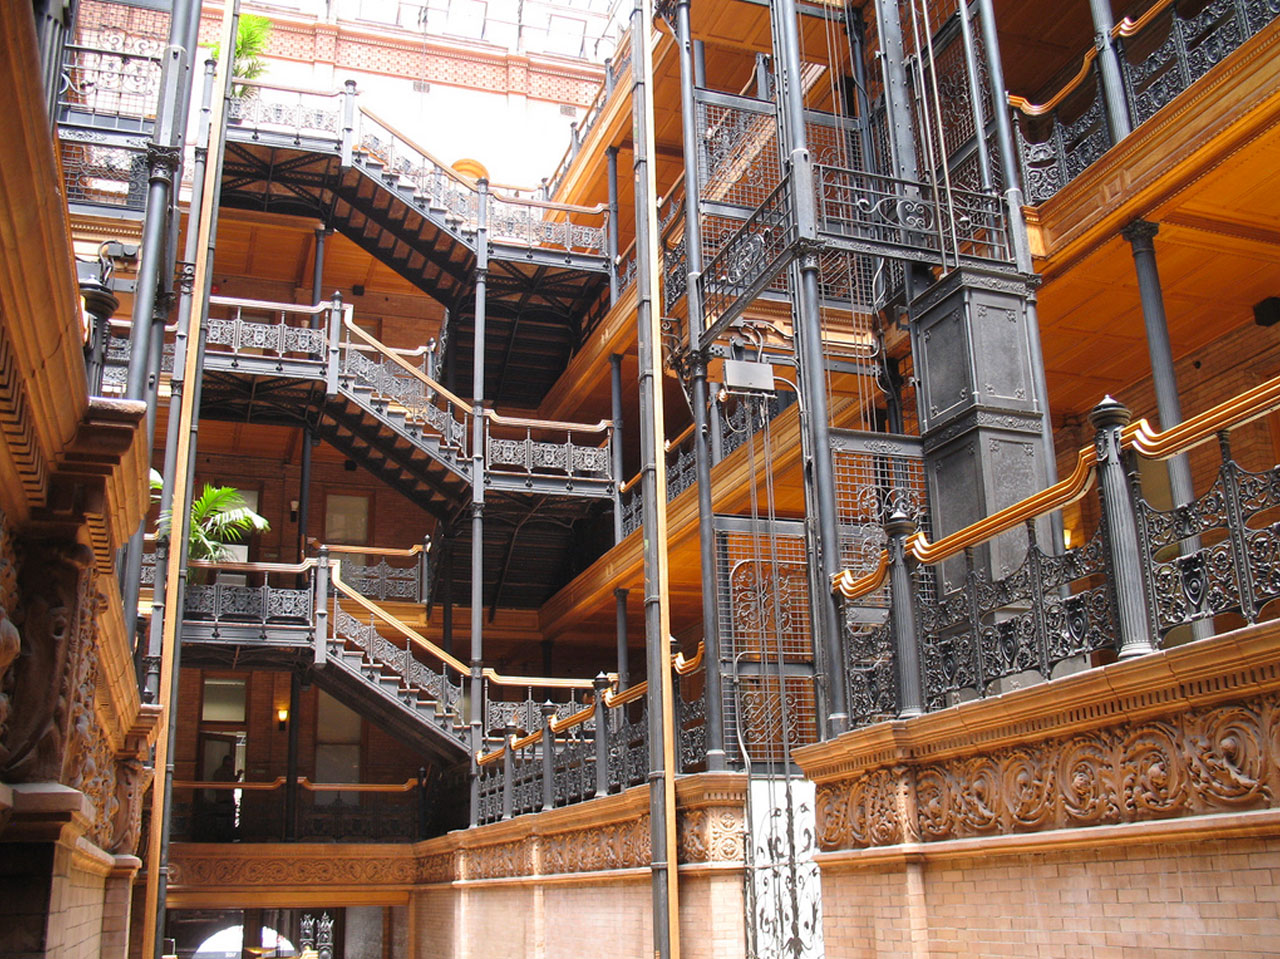 Interior shot of the Bradbury Building showing lattice work.